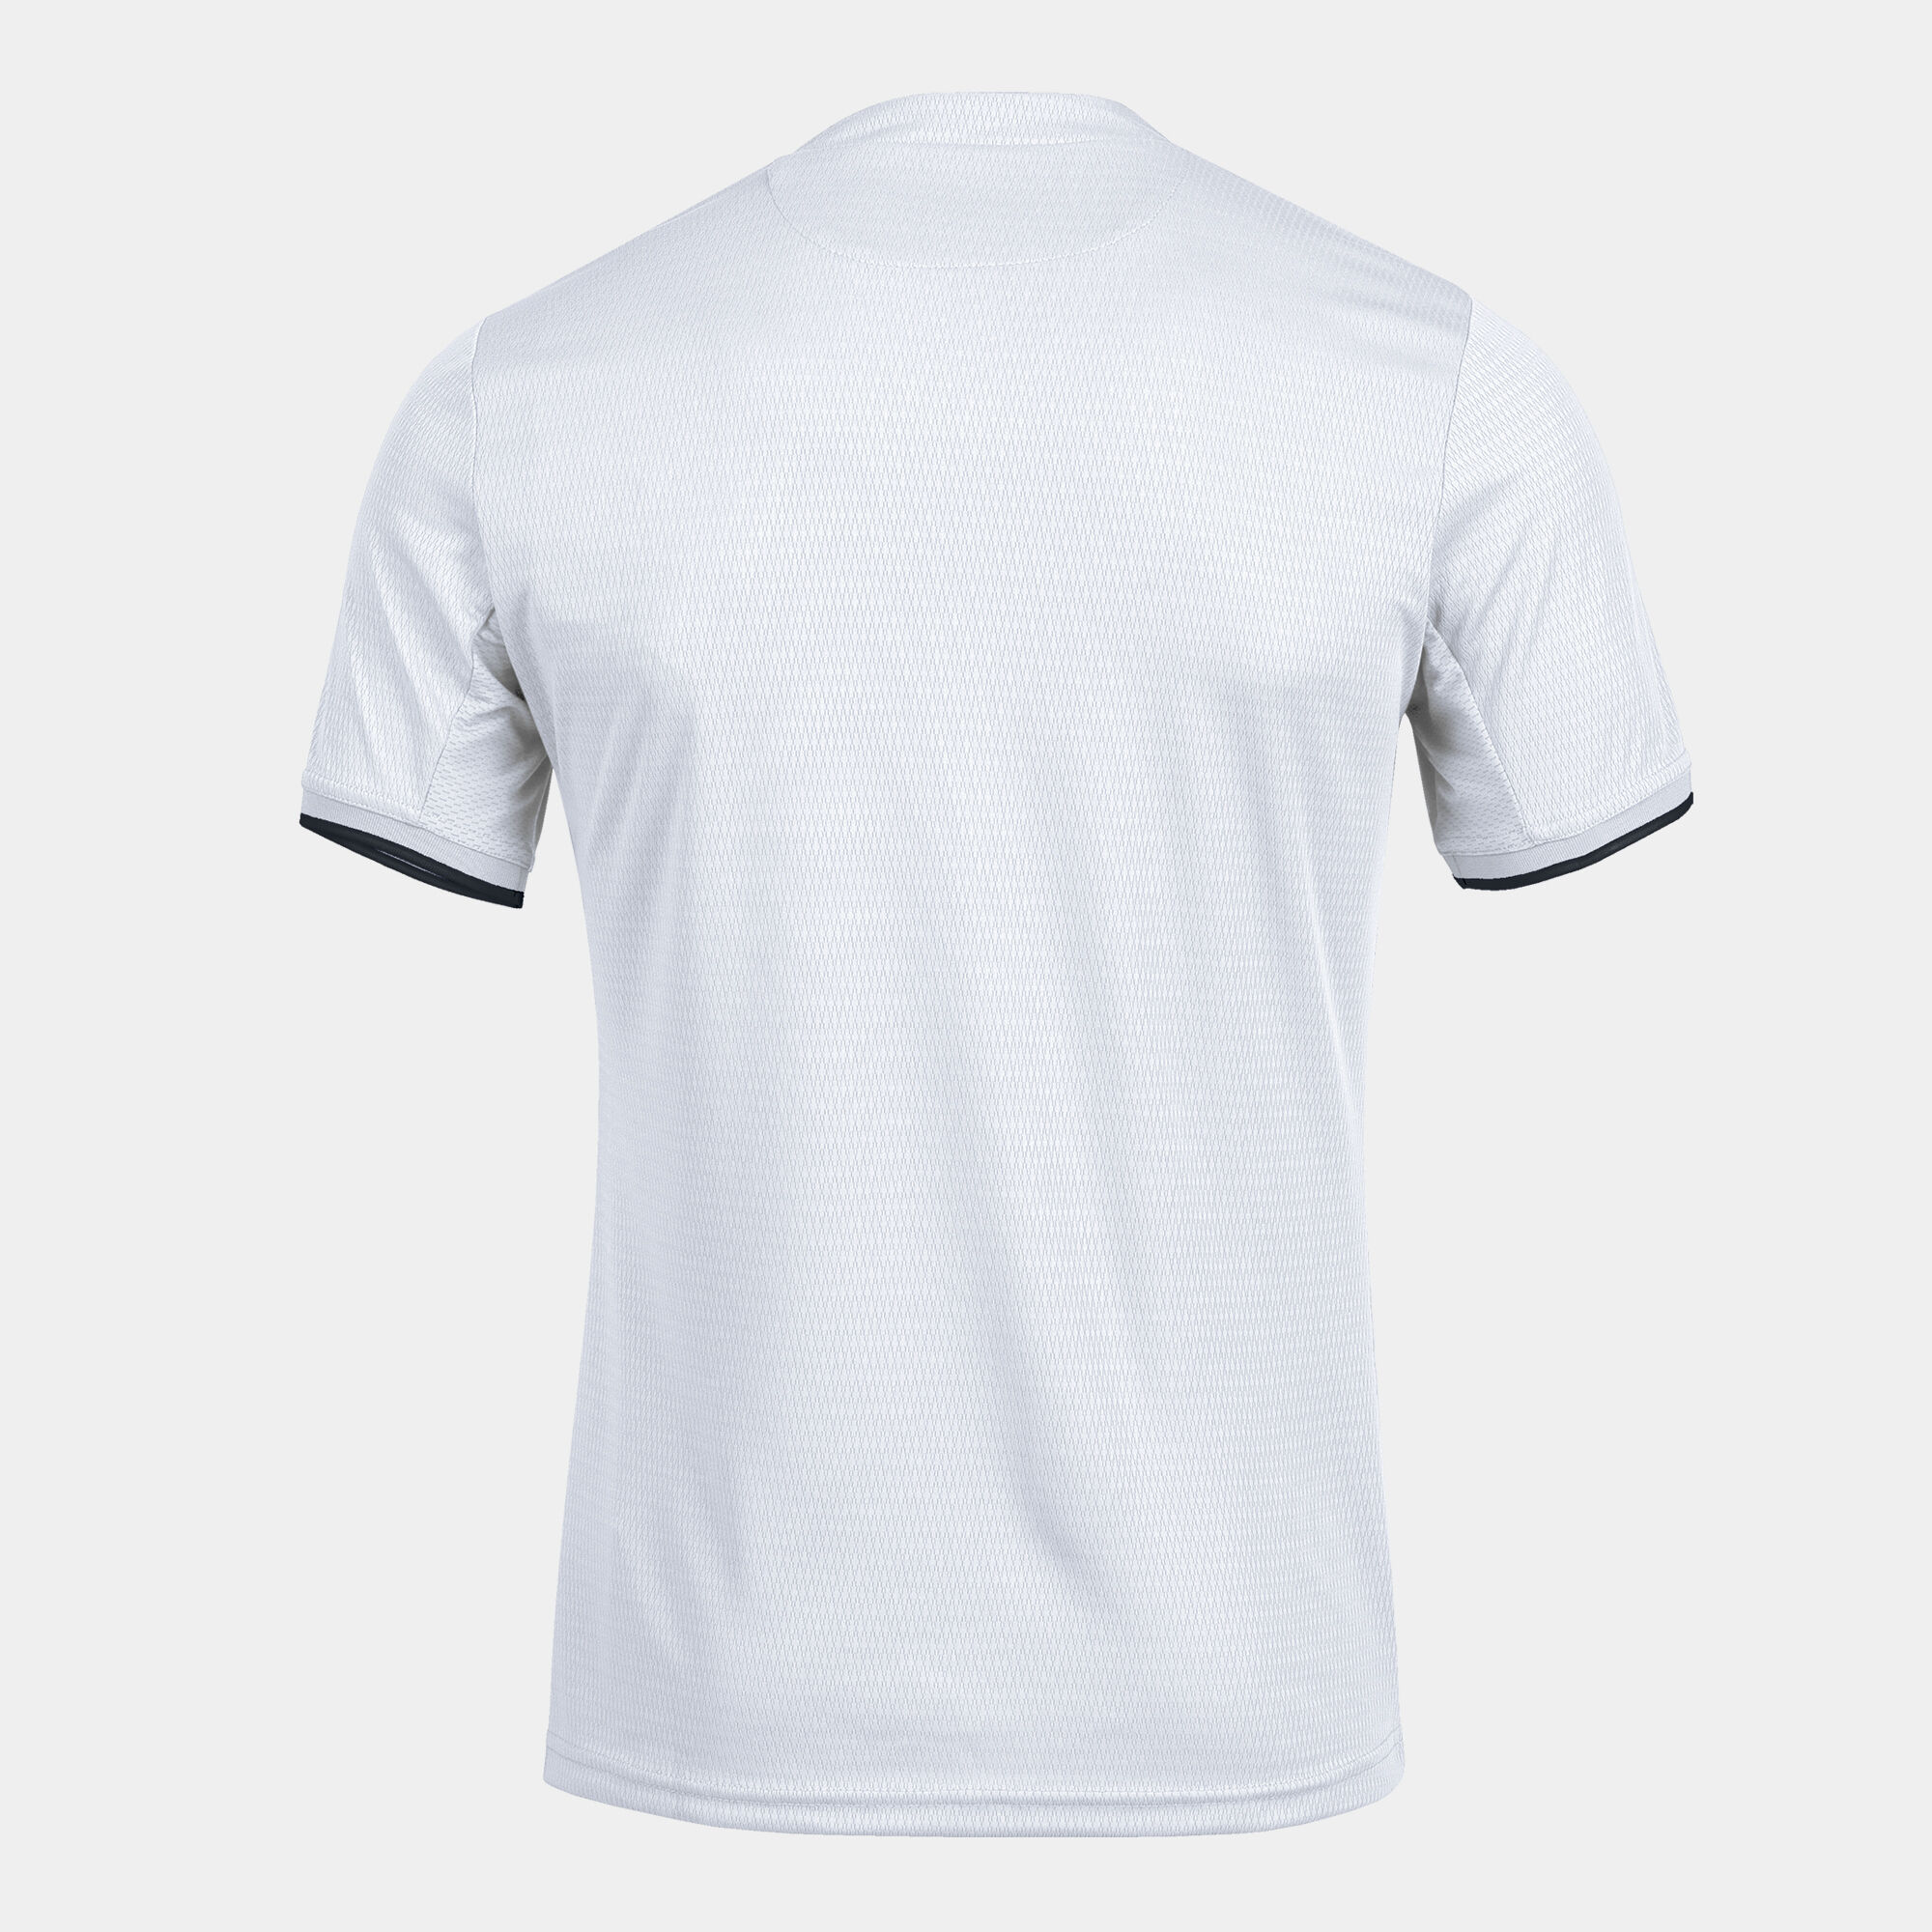 Camiseta manga corta hombre Toletum IV blanco negro